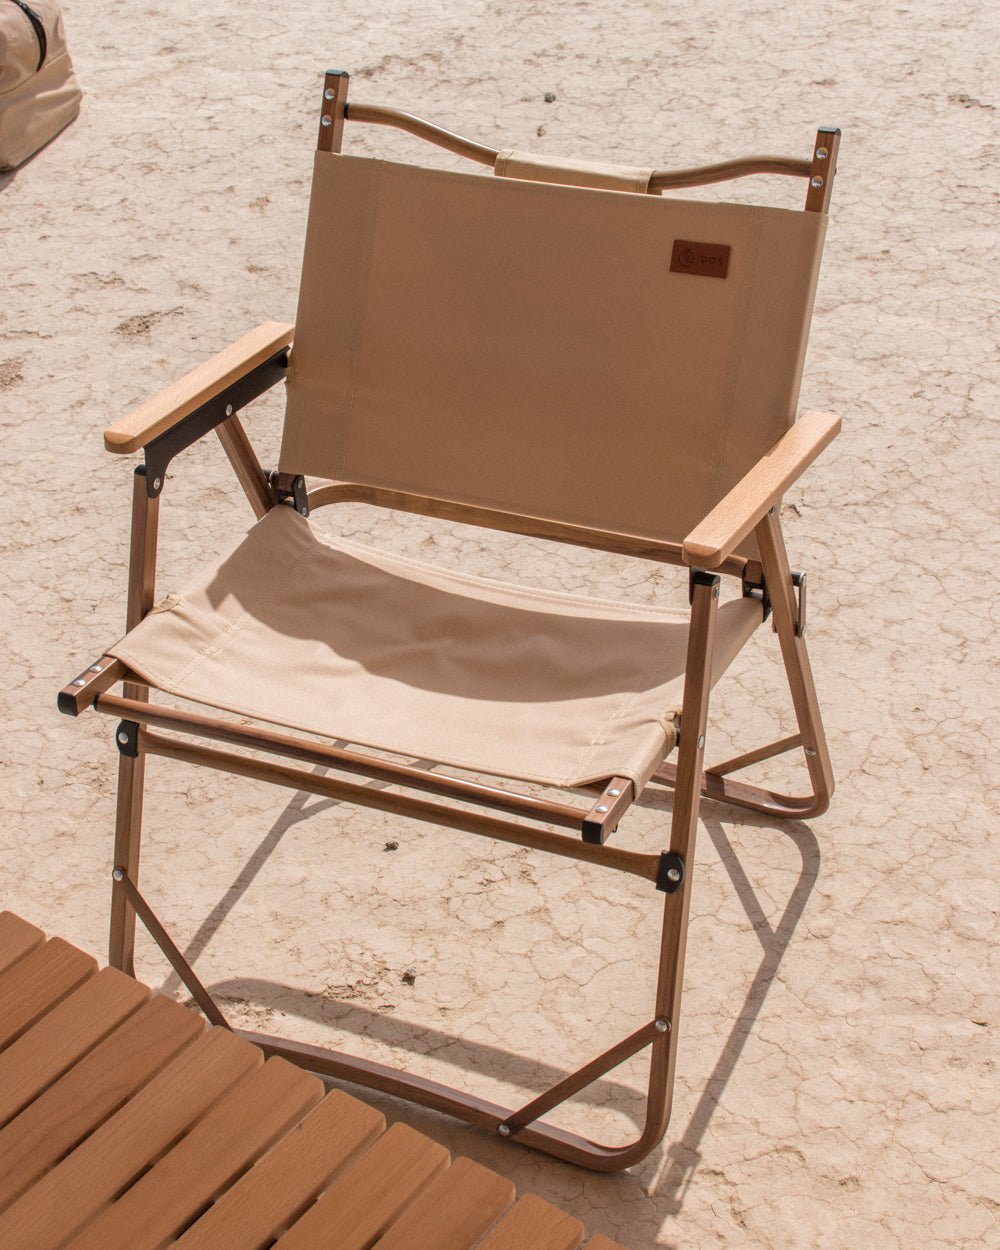 Cuddleback Camp Chair - Desert Overland Supply